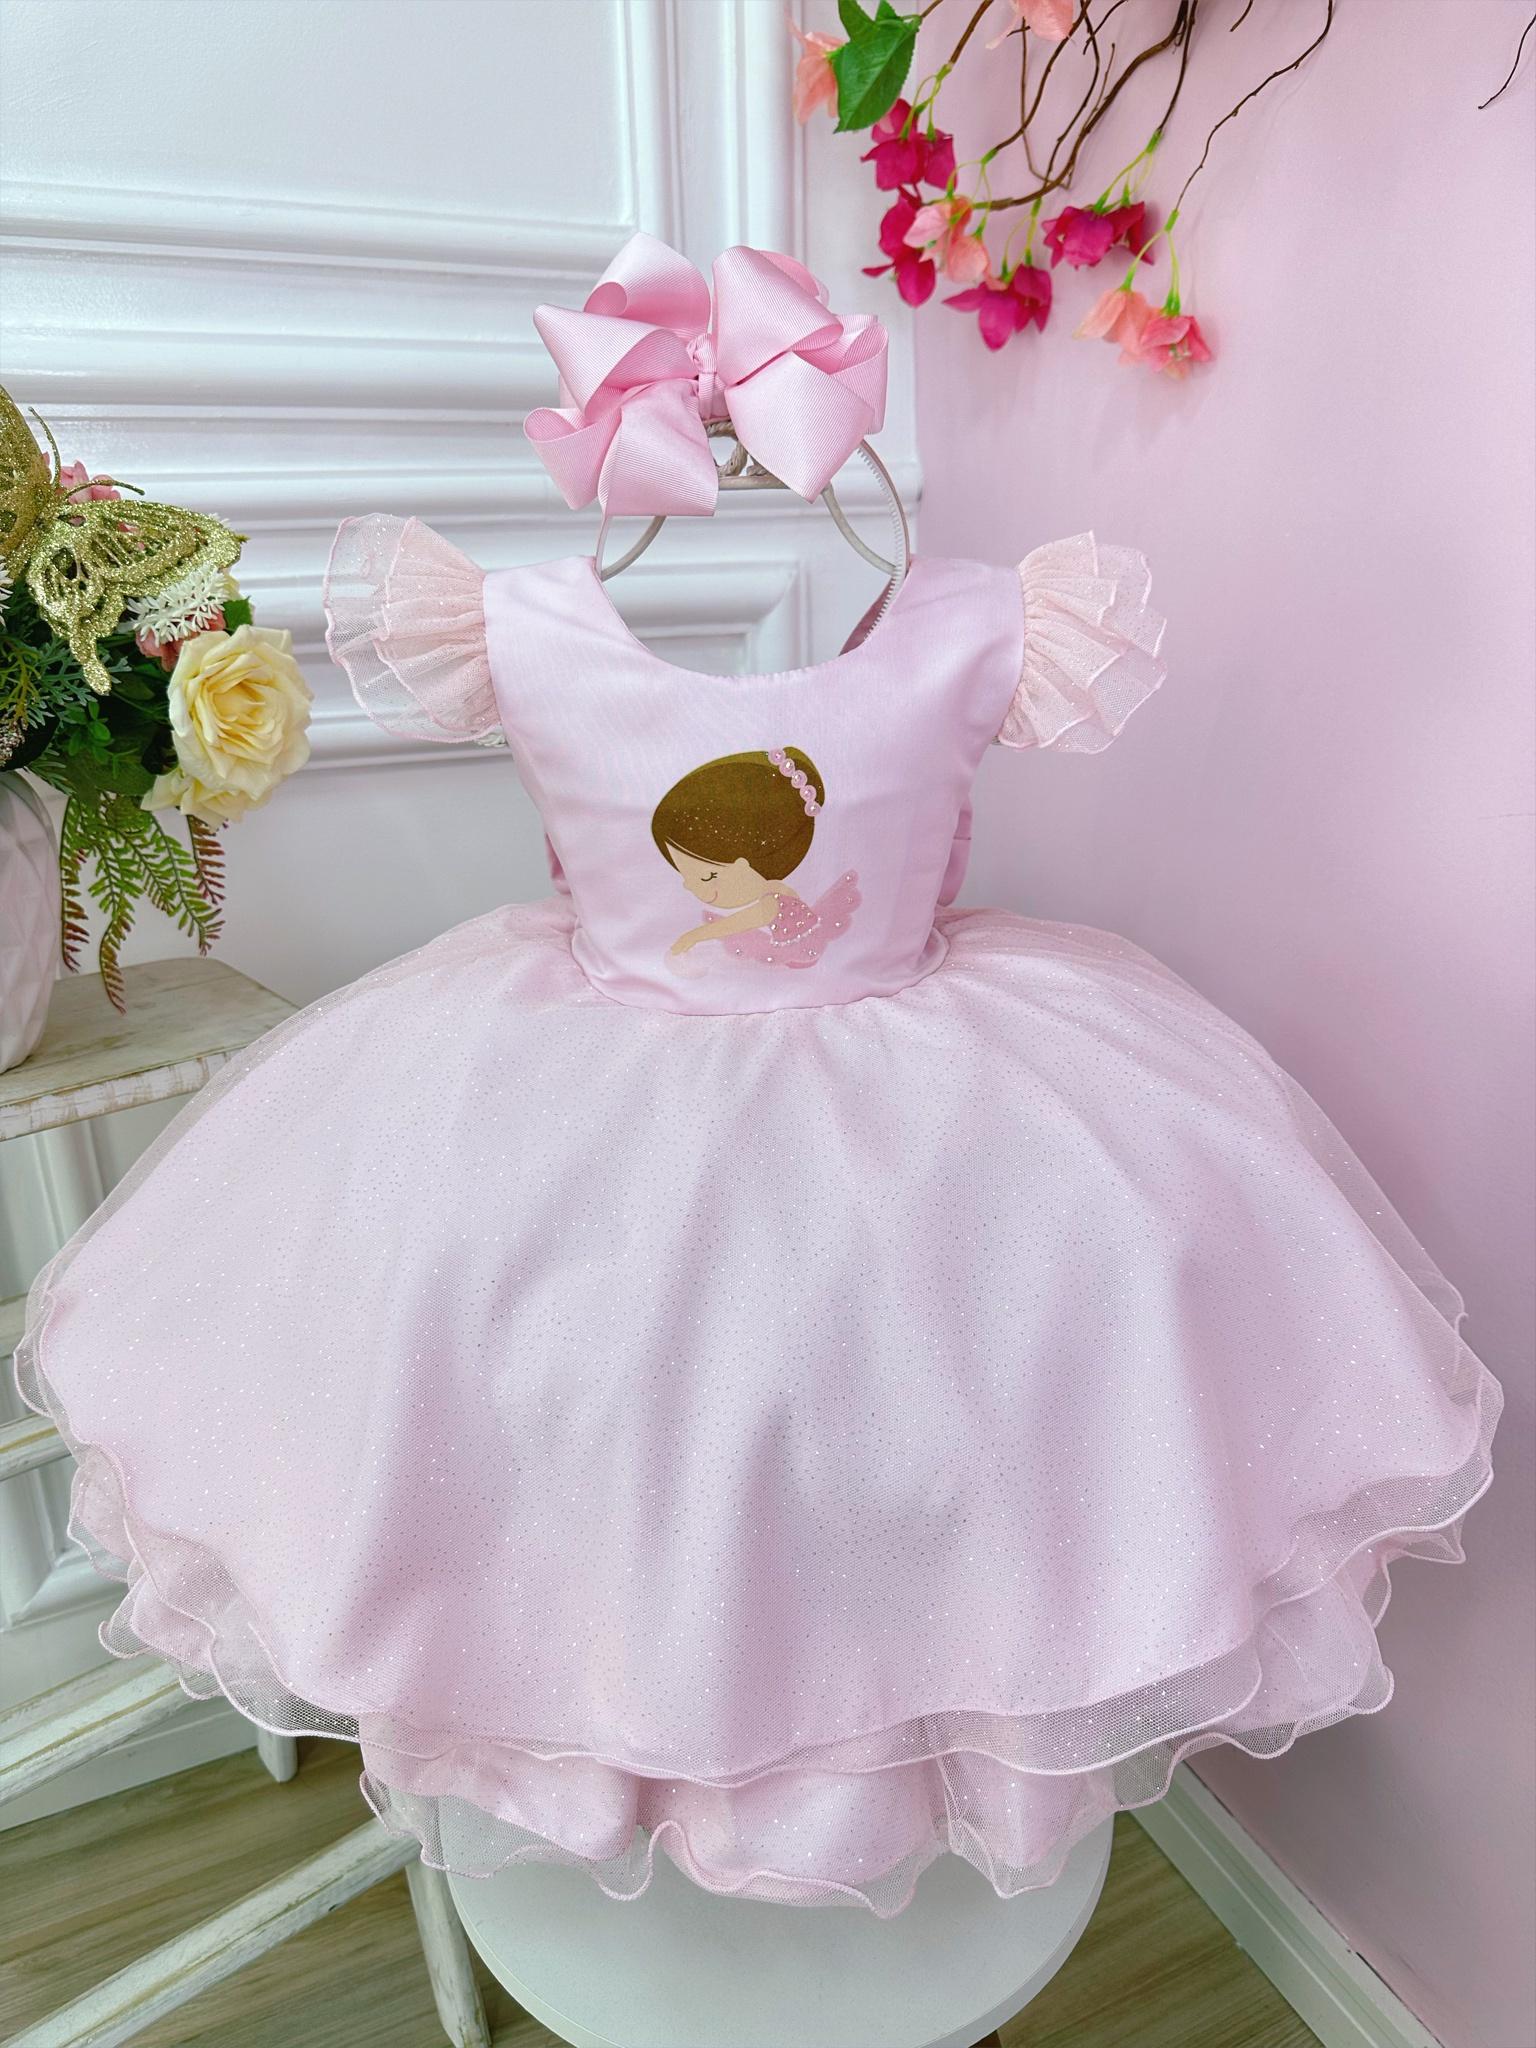 Vestido Infantil Rosa Bailarina Saia C/ Glitter Festas Luxo